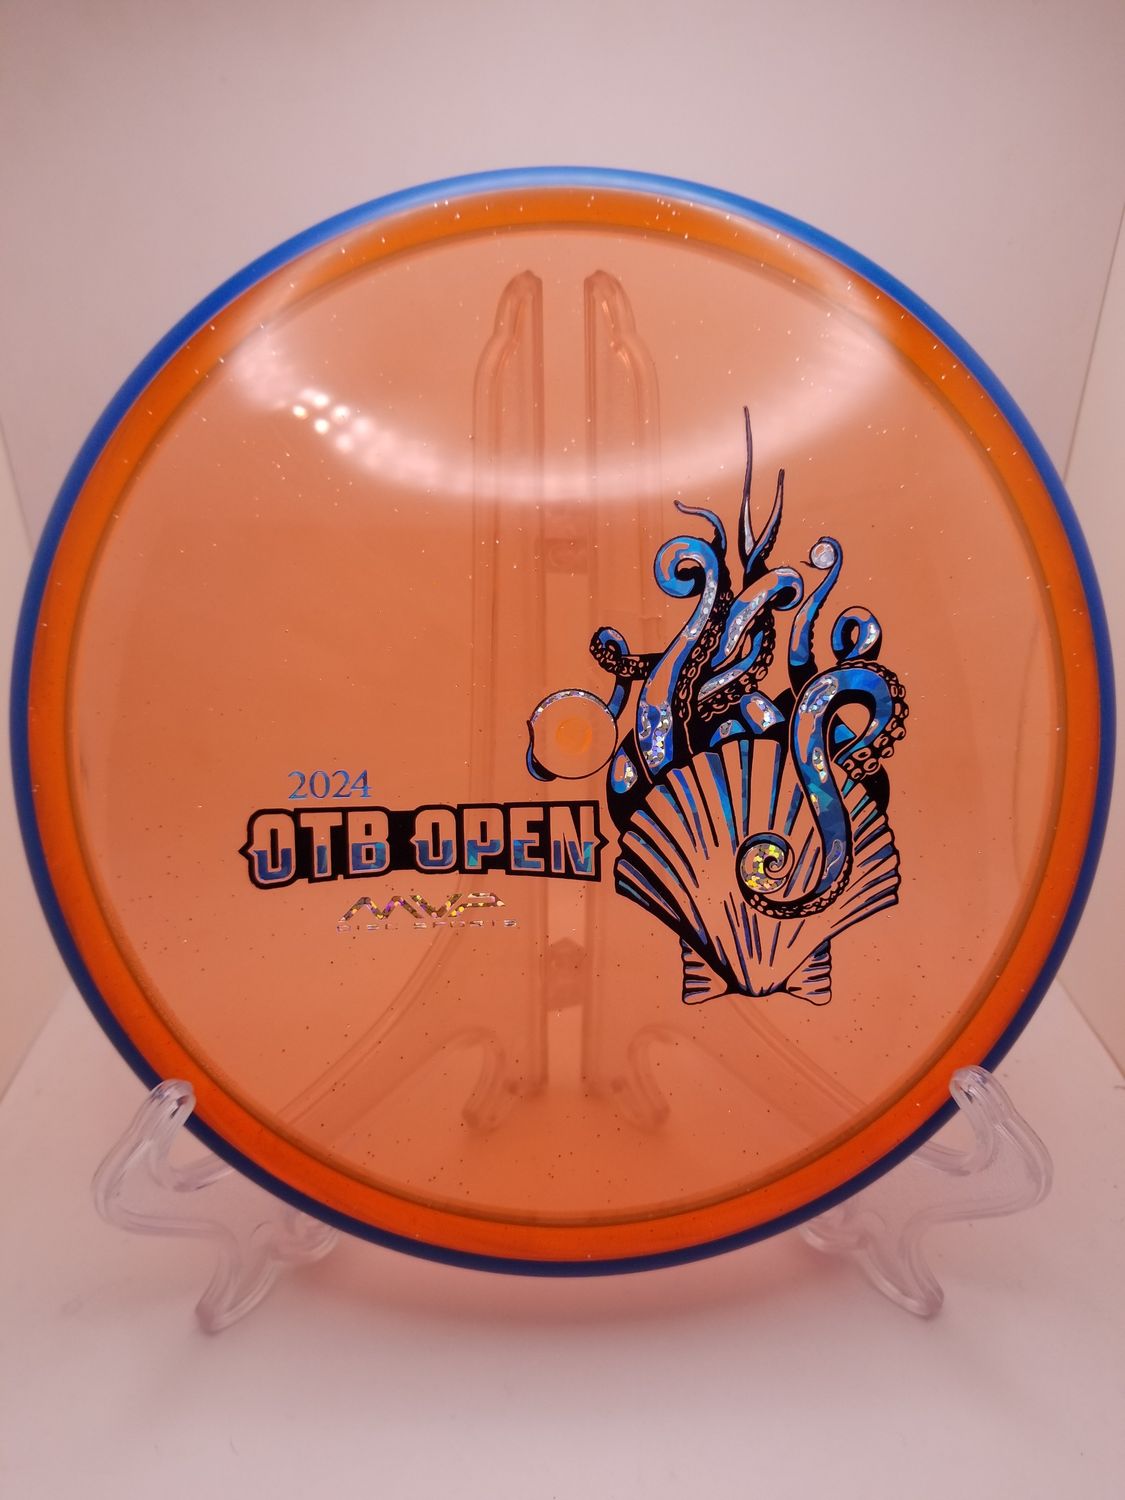 Axiom Discs Phase 1 2024 OTB Open Proton Soft Paradox Orange with Blue Rim Weight: 174g